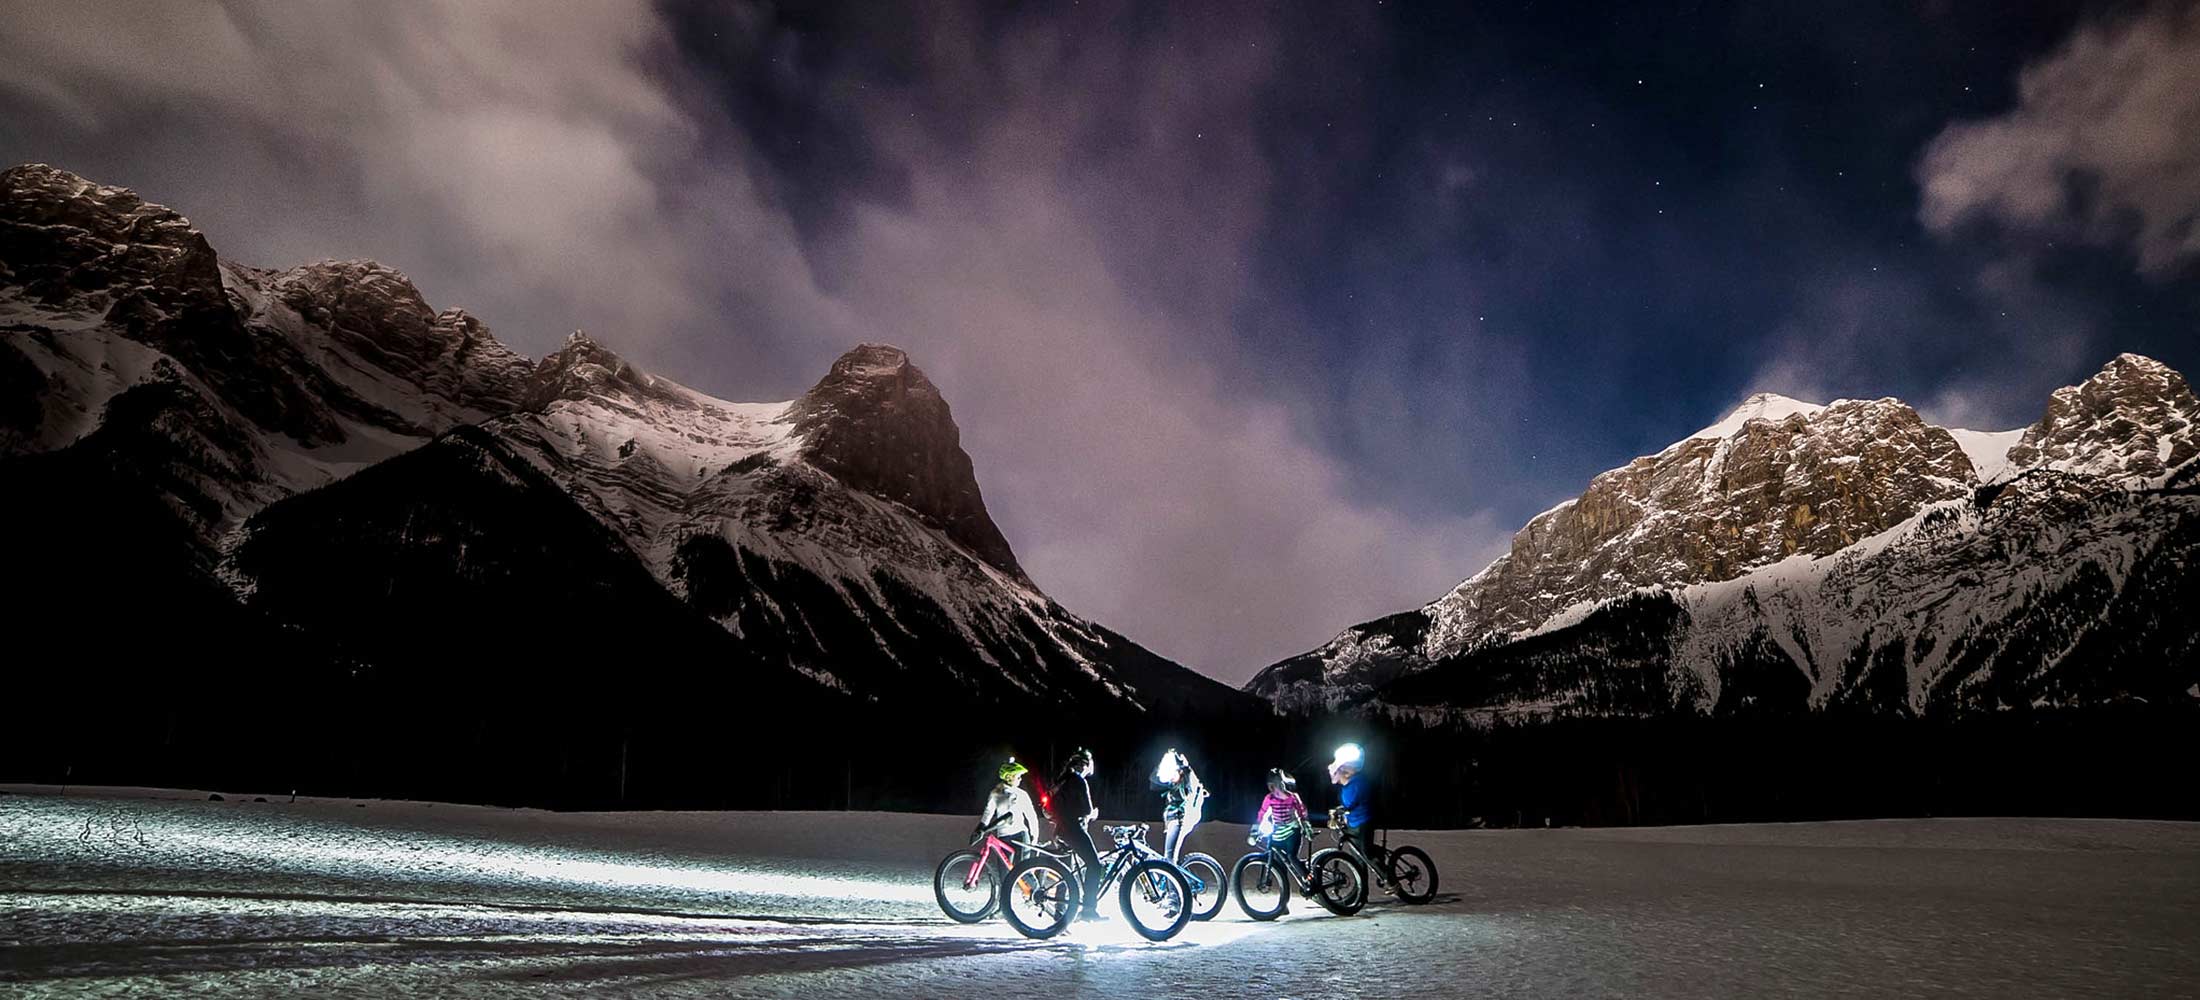 Night time winter bike ride in Canmore, Alberta